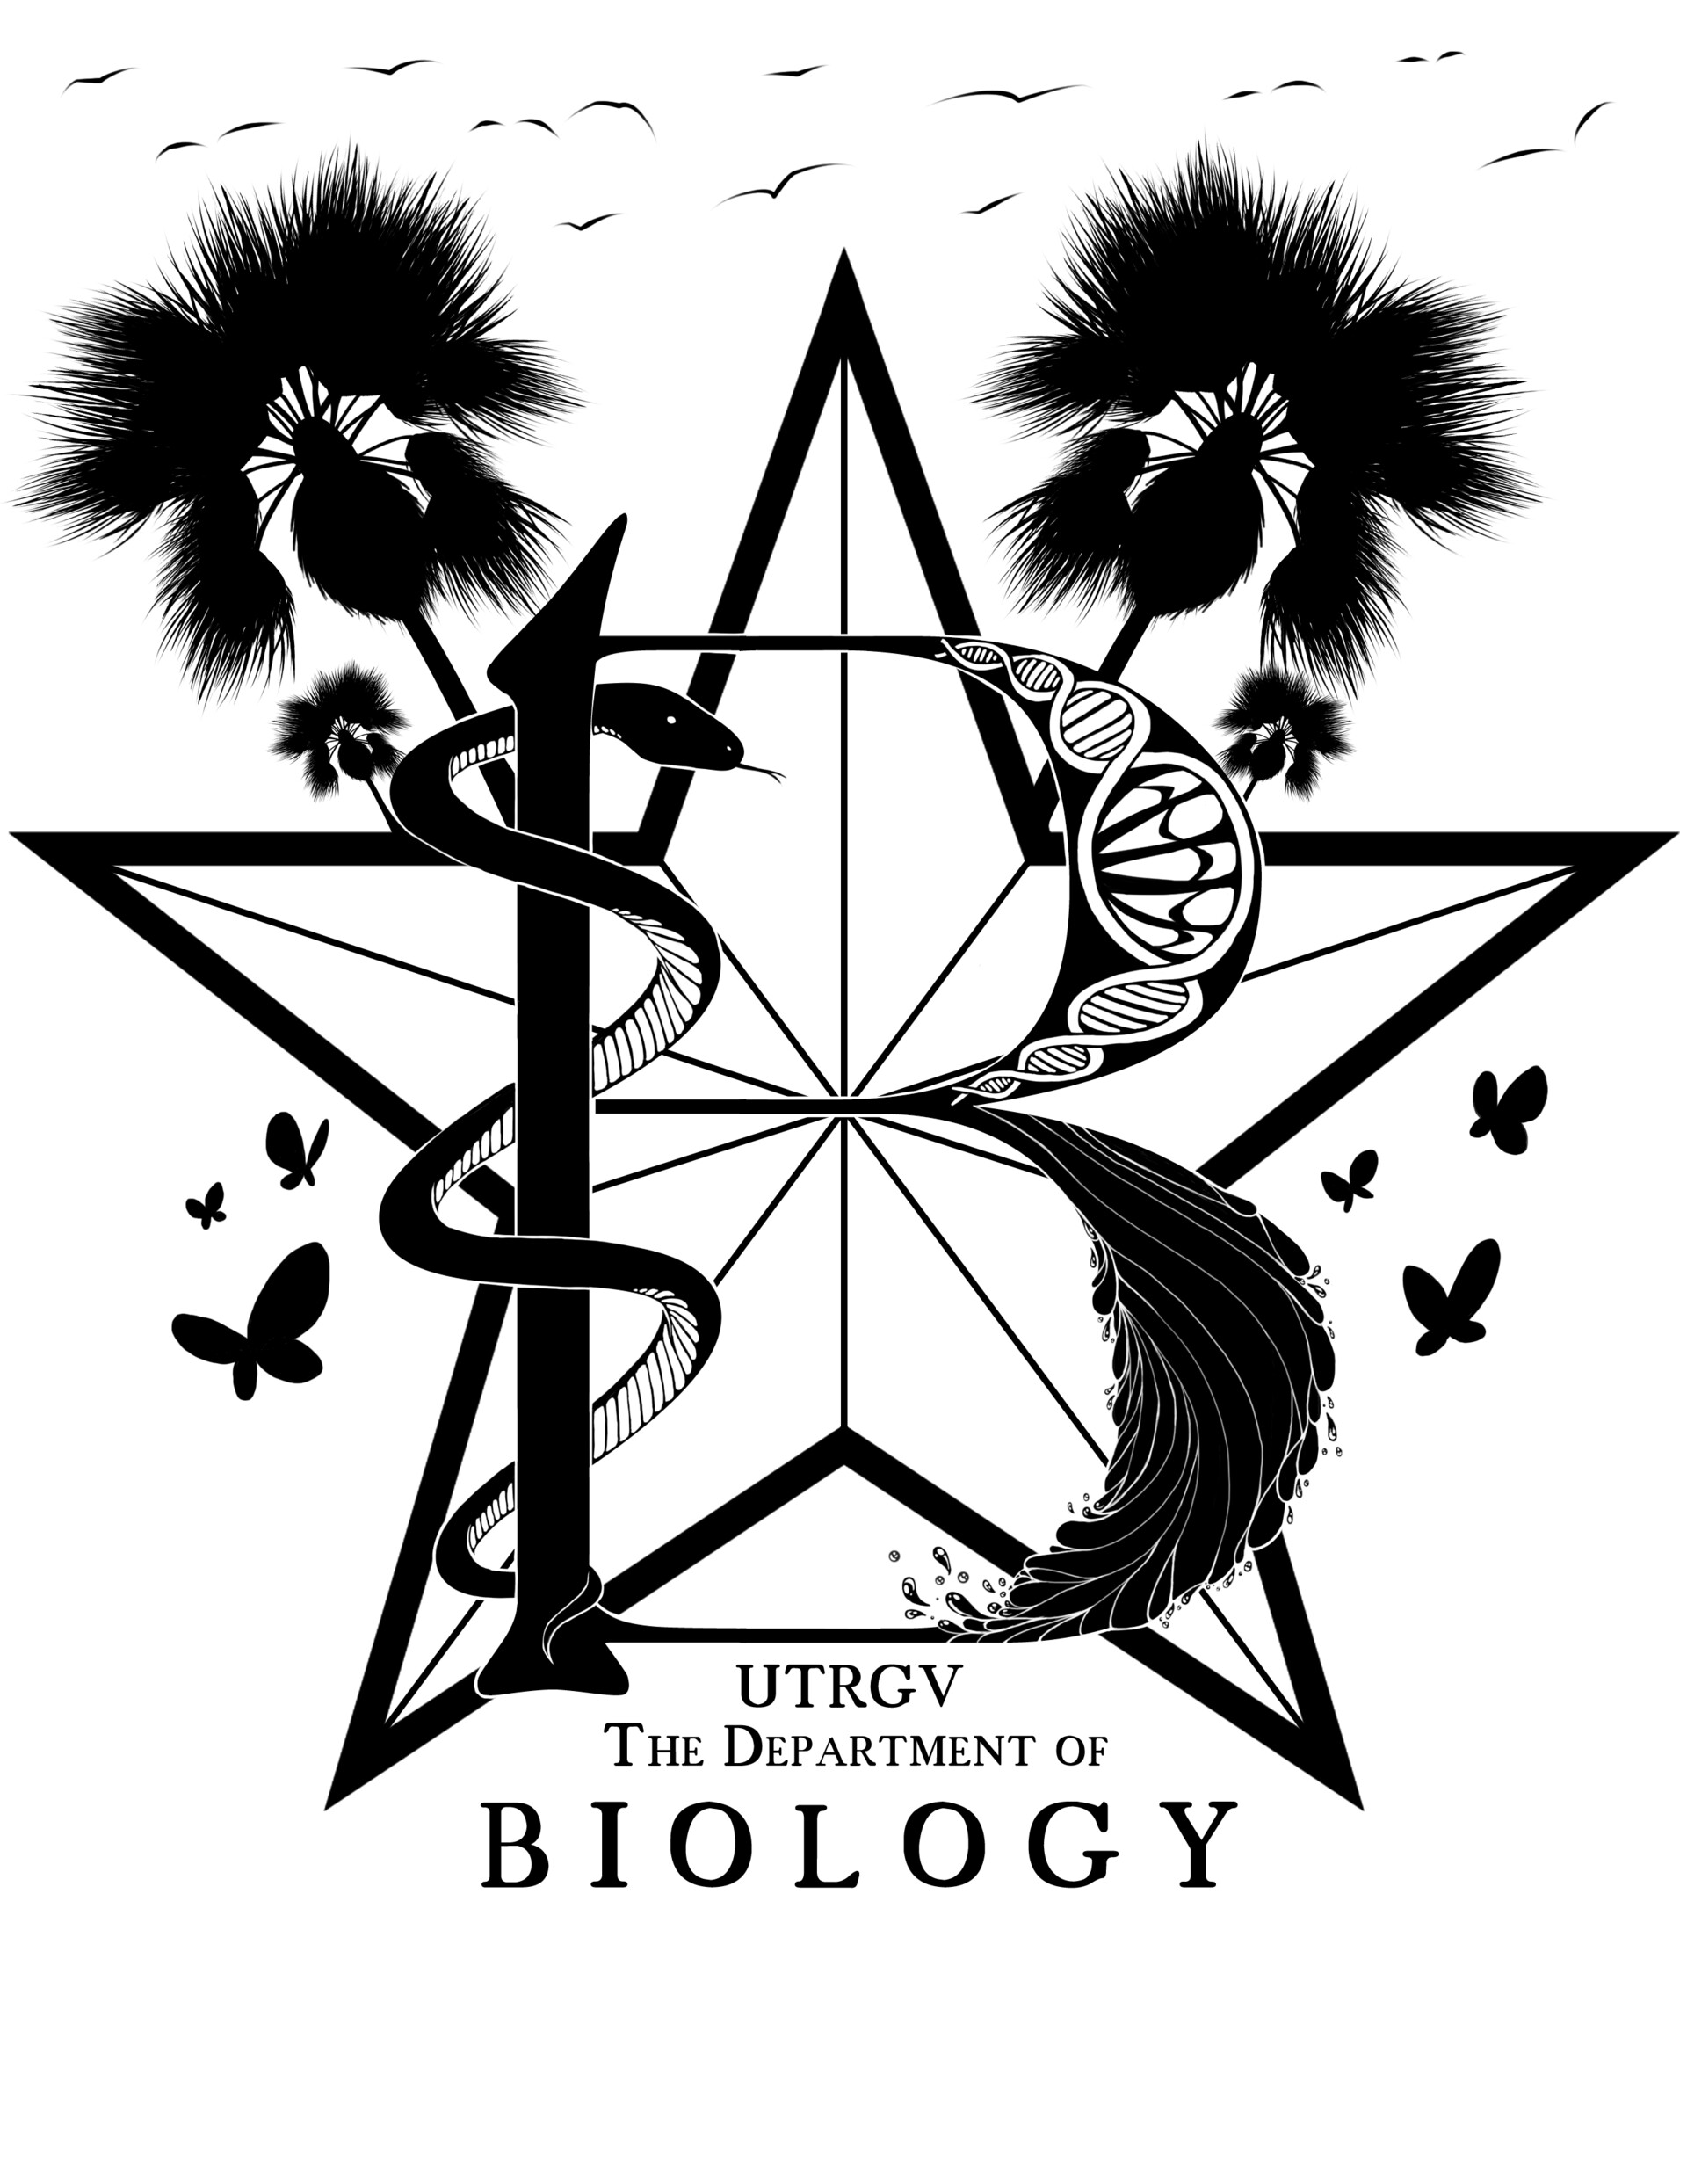 Large Scale Biology Logo PNG Transparent & SVG Vector - Freebie Supply